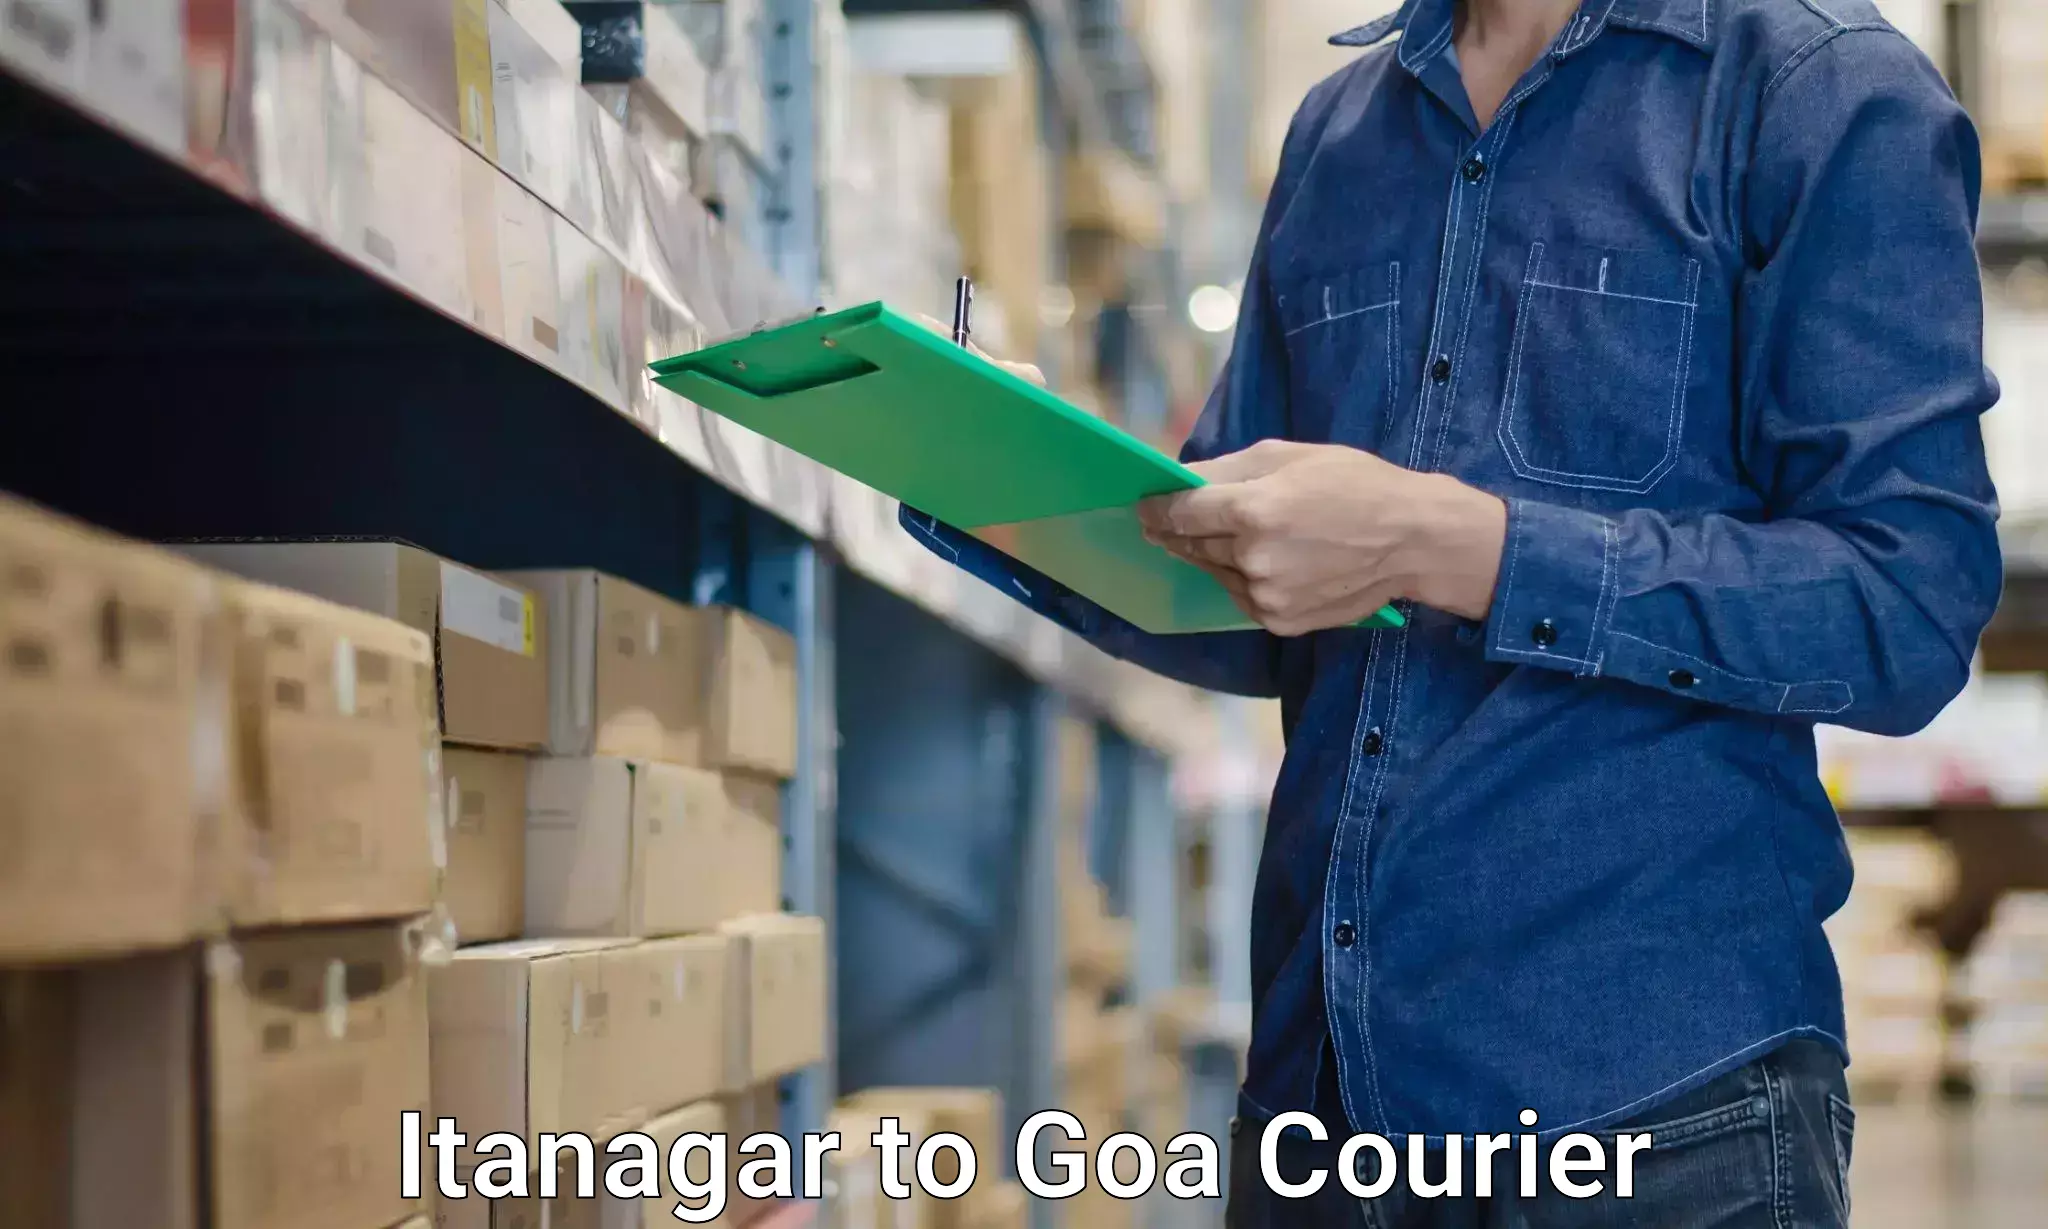 Professional moving company Itanagar to South Goa